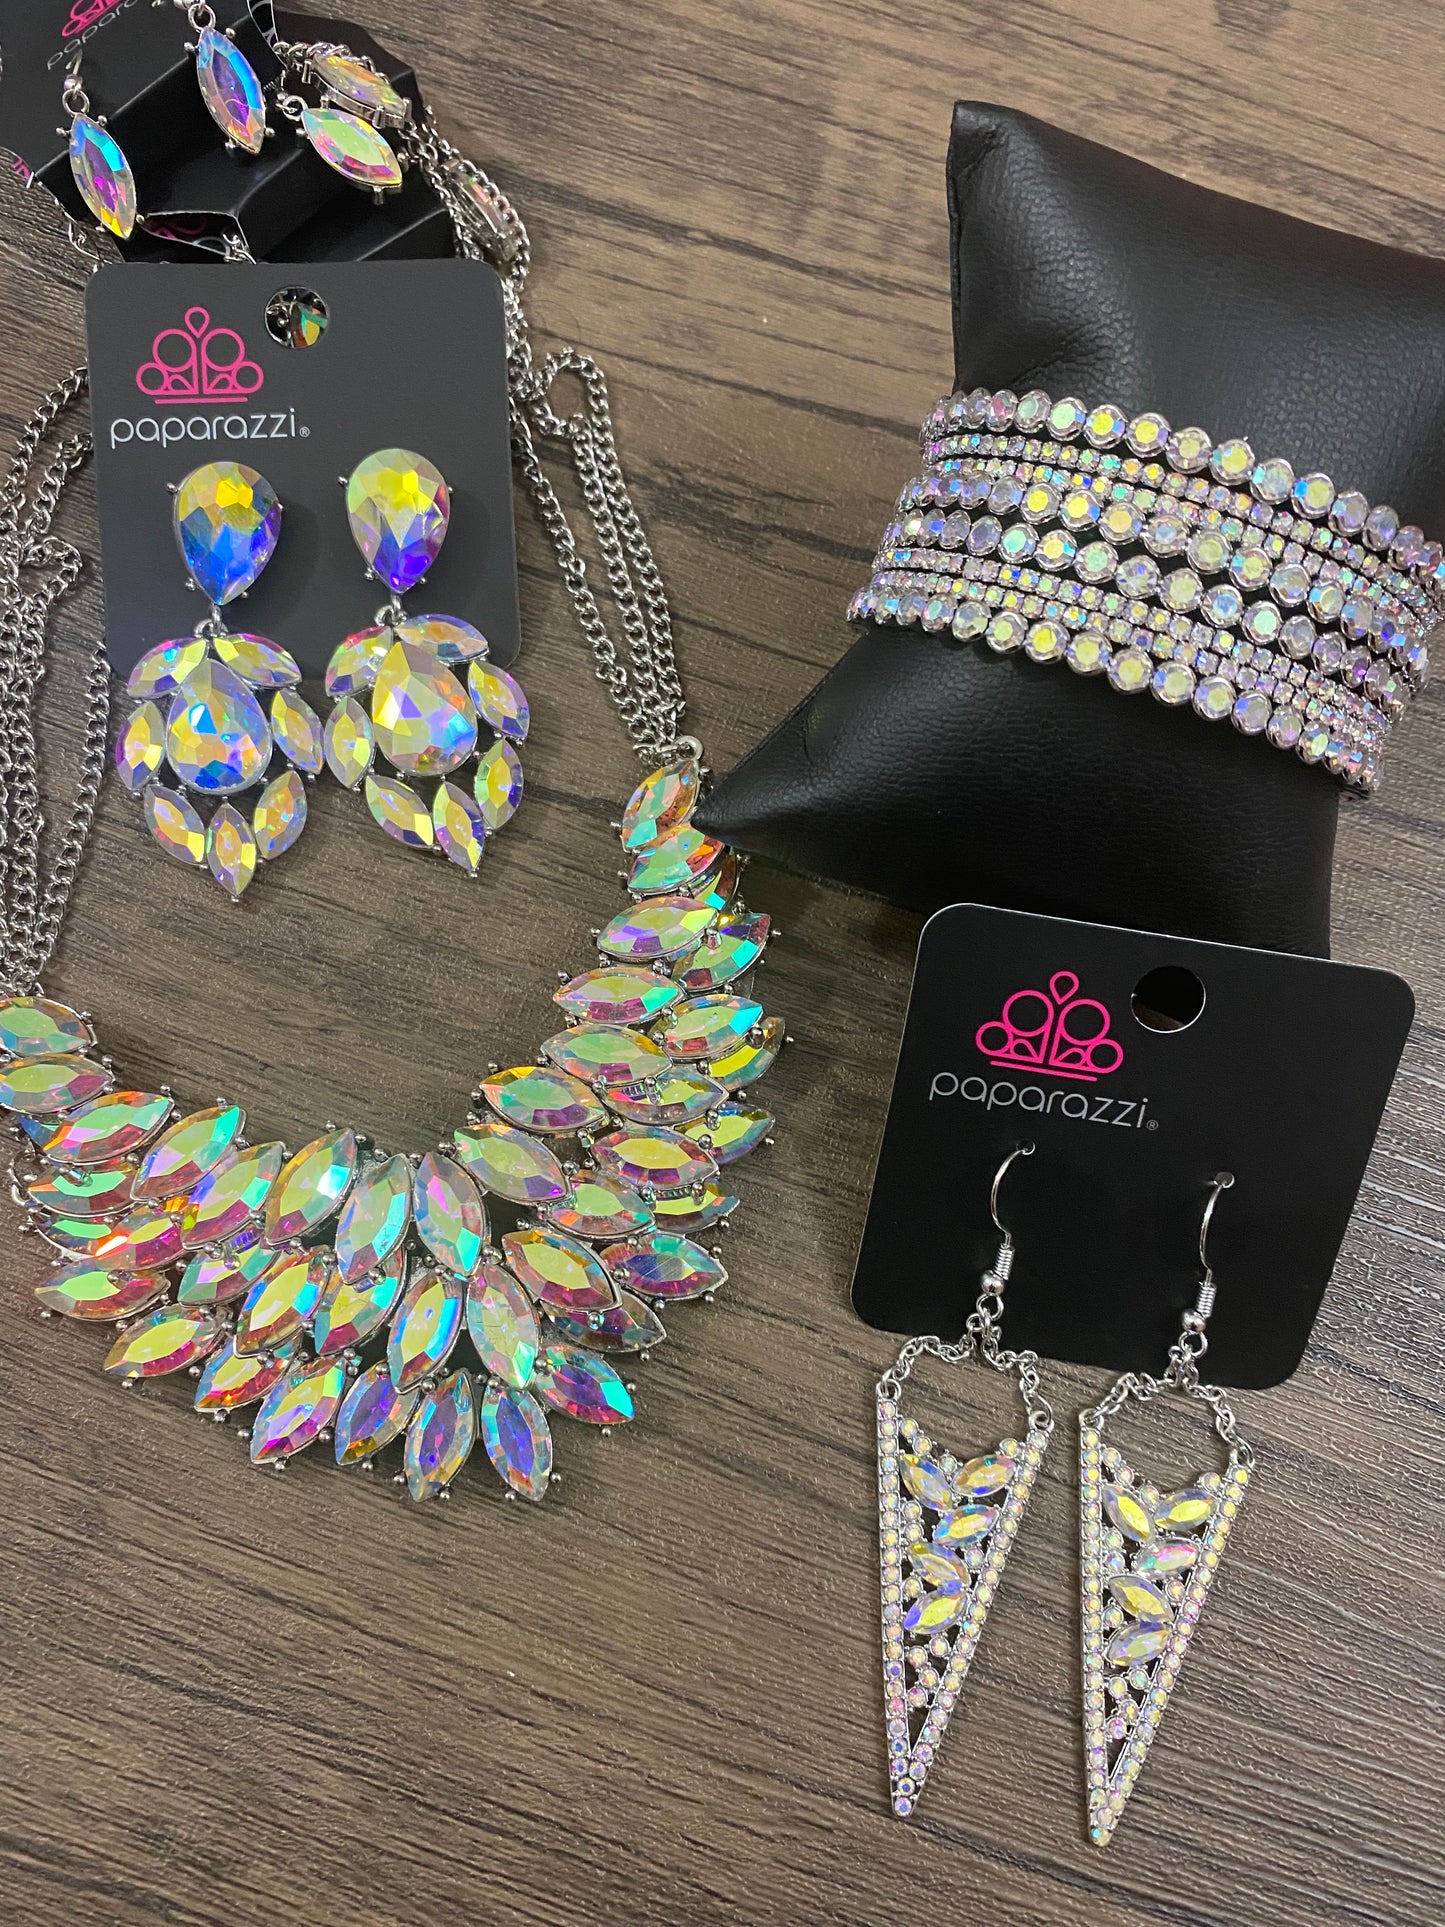 SHOWSTOPPER IRIDESCENT SET featuring Paparazzi iridescent jewelry